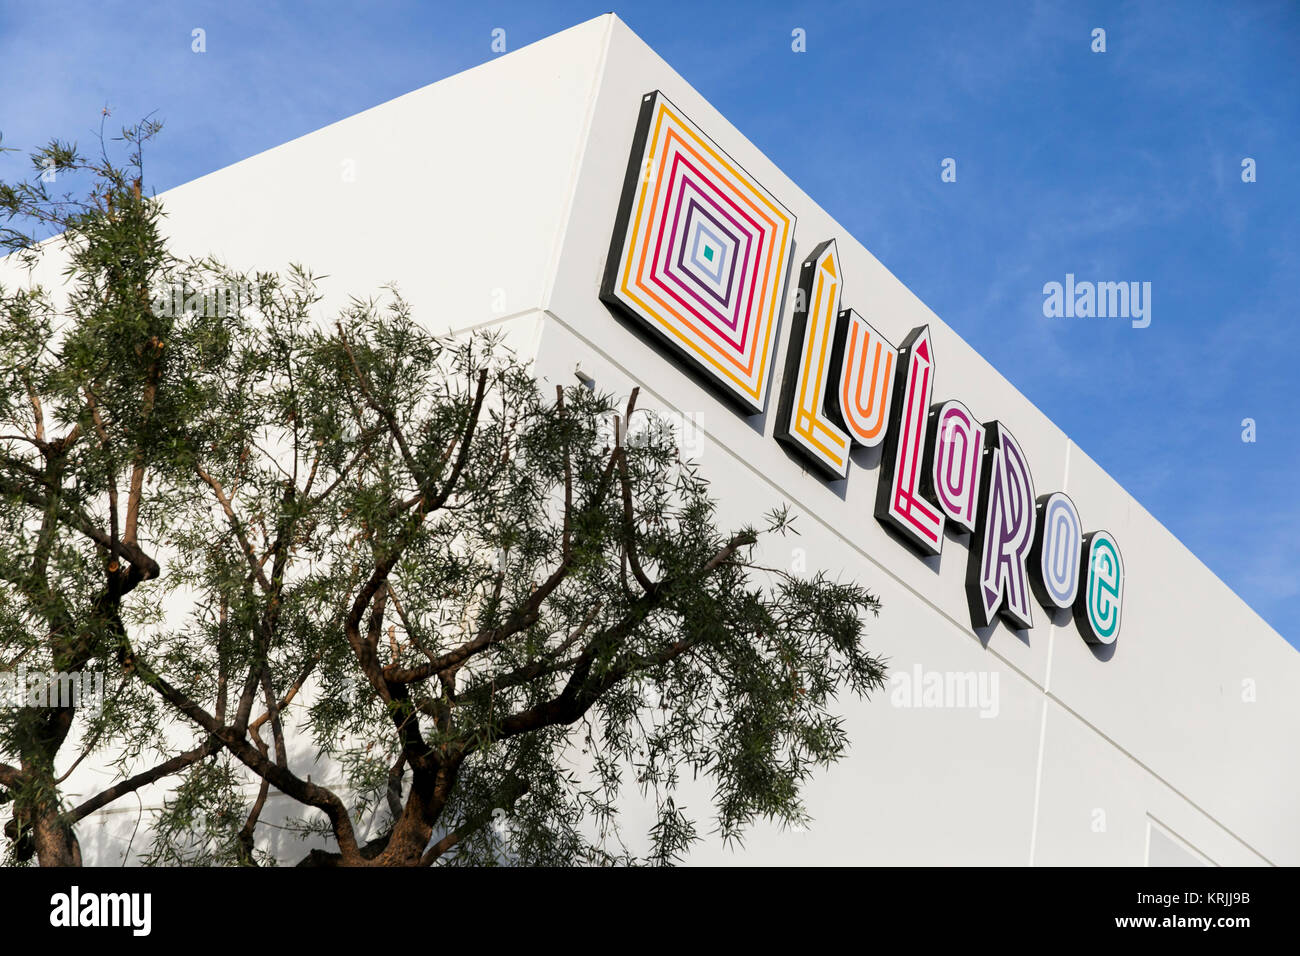 https://c8.alamy.com/comp/KRJJ9B/a-logo-sign-outside-of-the-headquarters-of-lularoe-in-corona-california-KRJJ9B.jpg